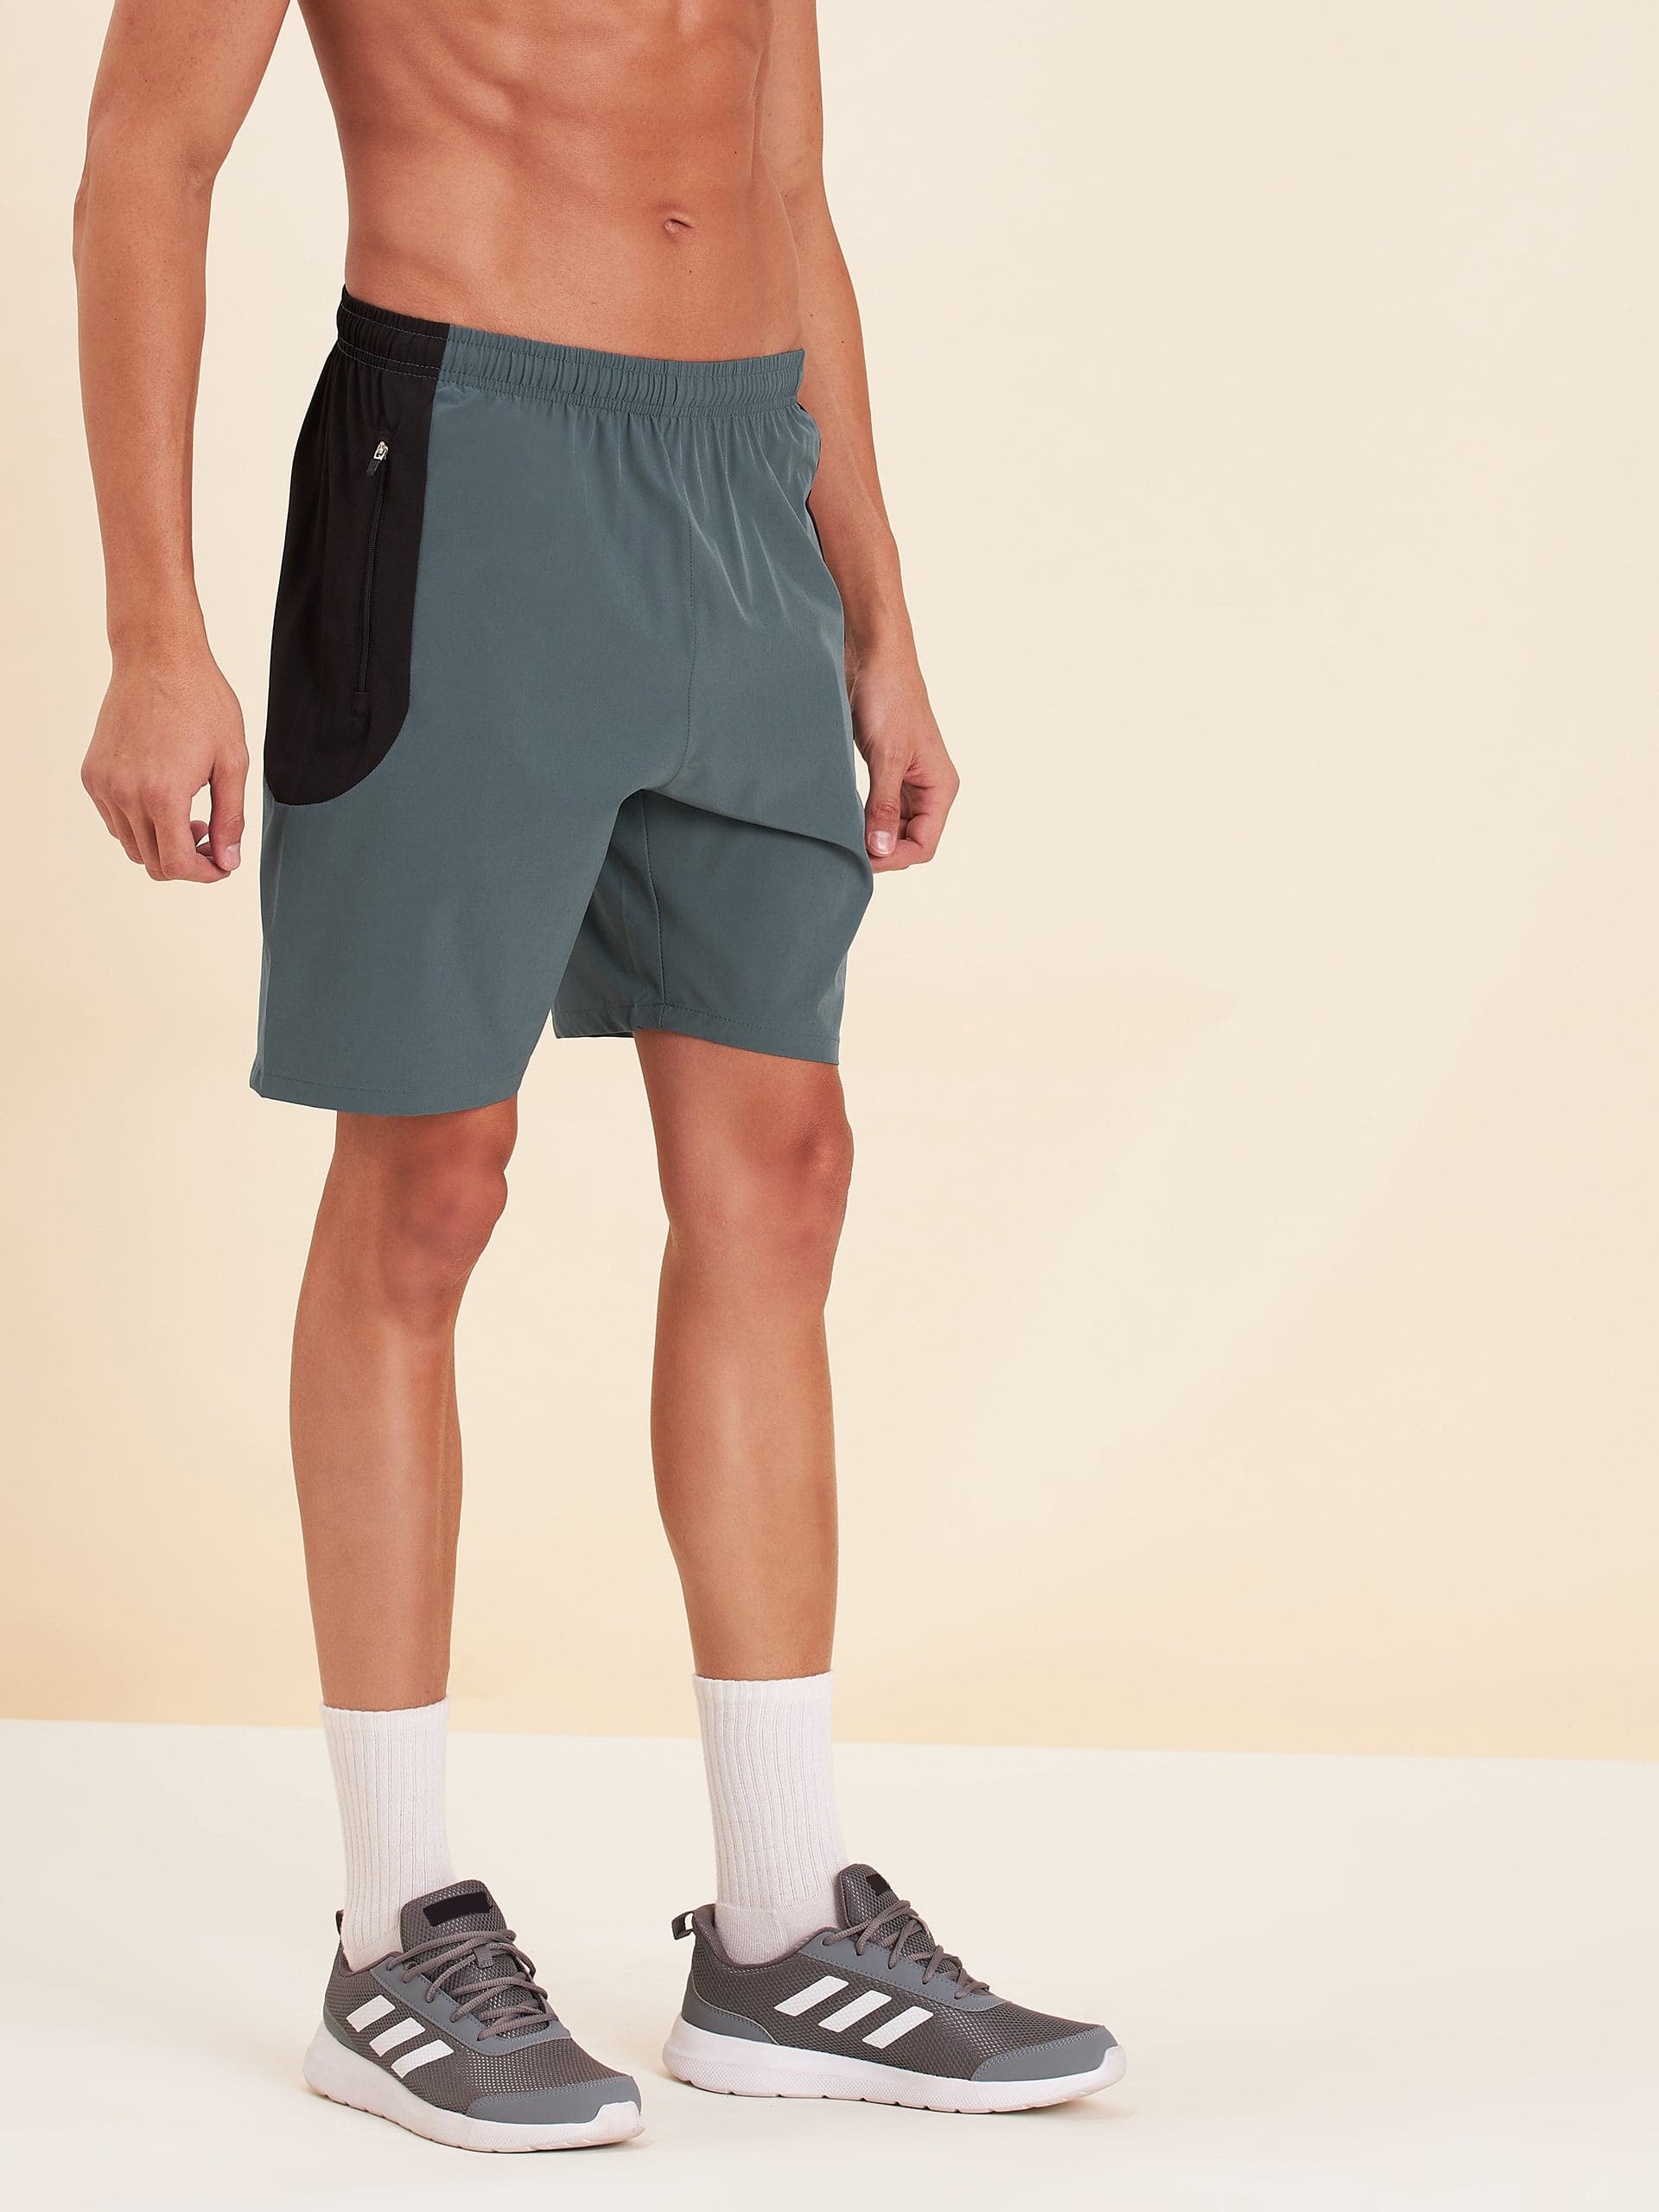 Men's Teal Blue & Black Dry Fit Shorts - LYUSH-MASCLN